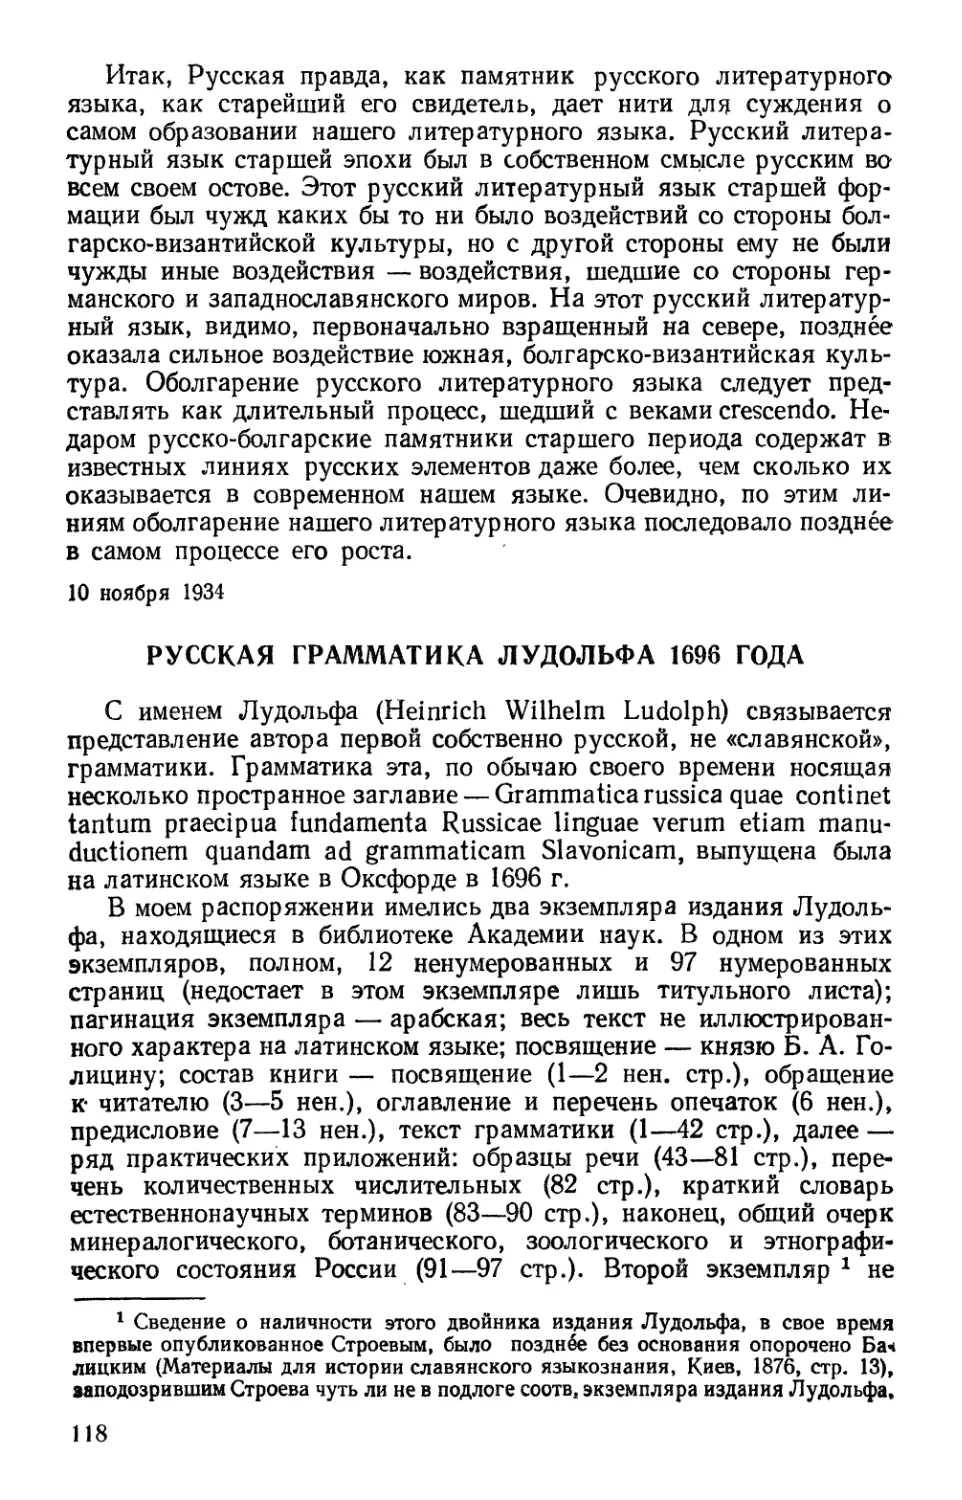 Русская грамматика Лудольфа 1696 года